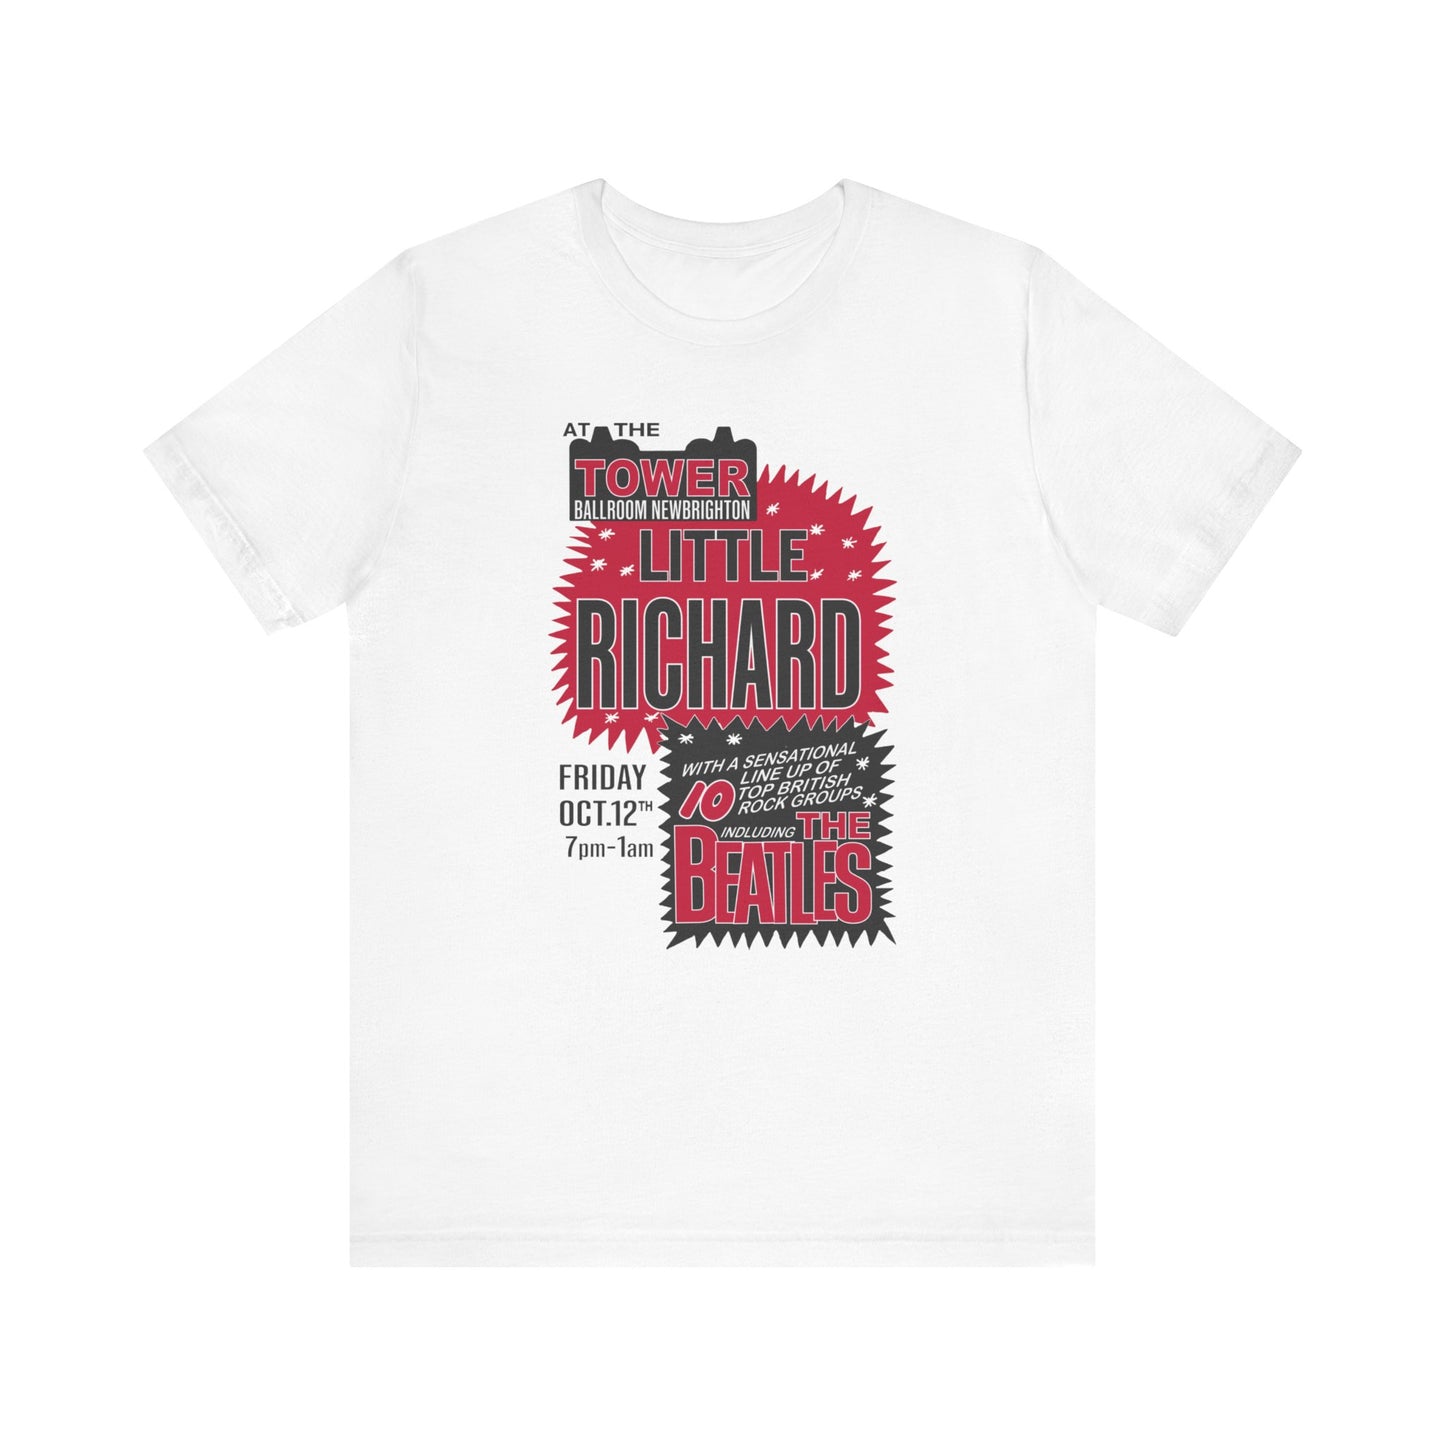 Little Richard & The Beatles - Unisex T-Shirt